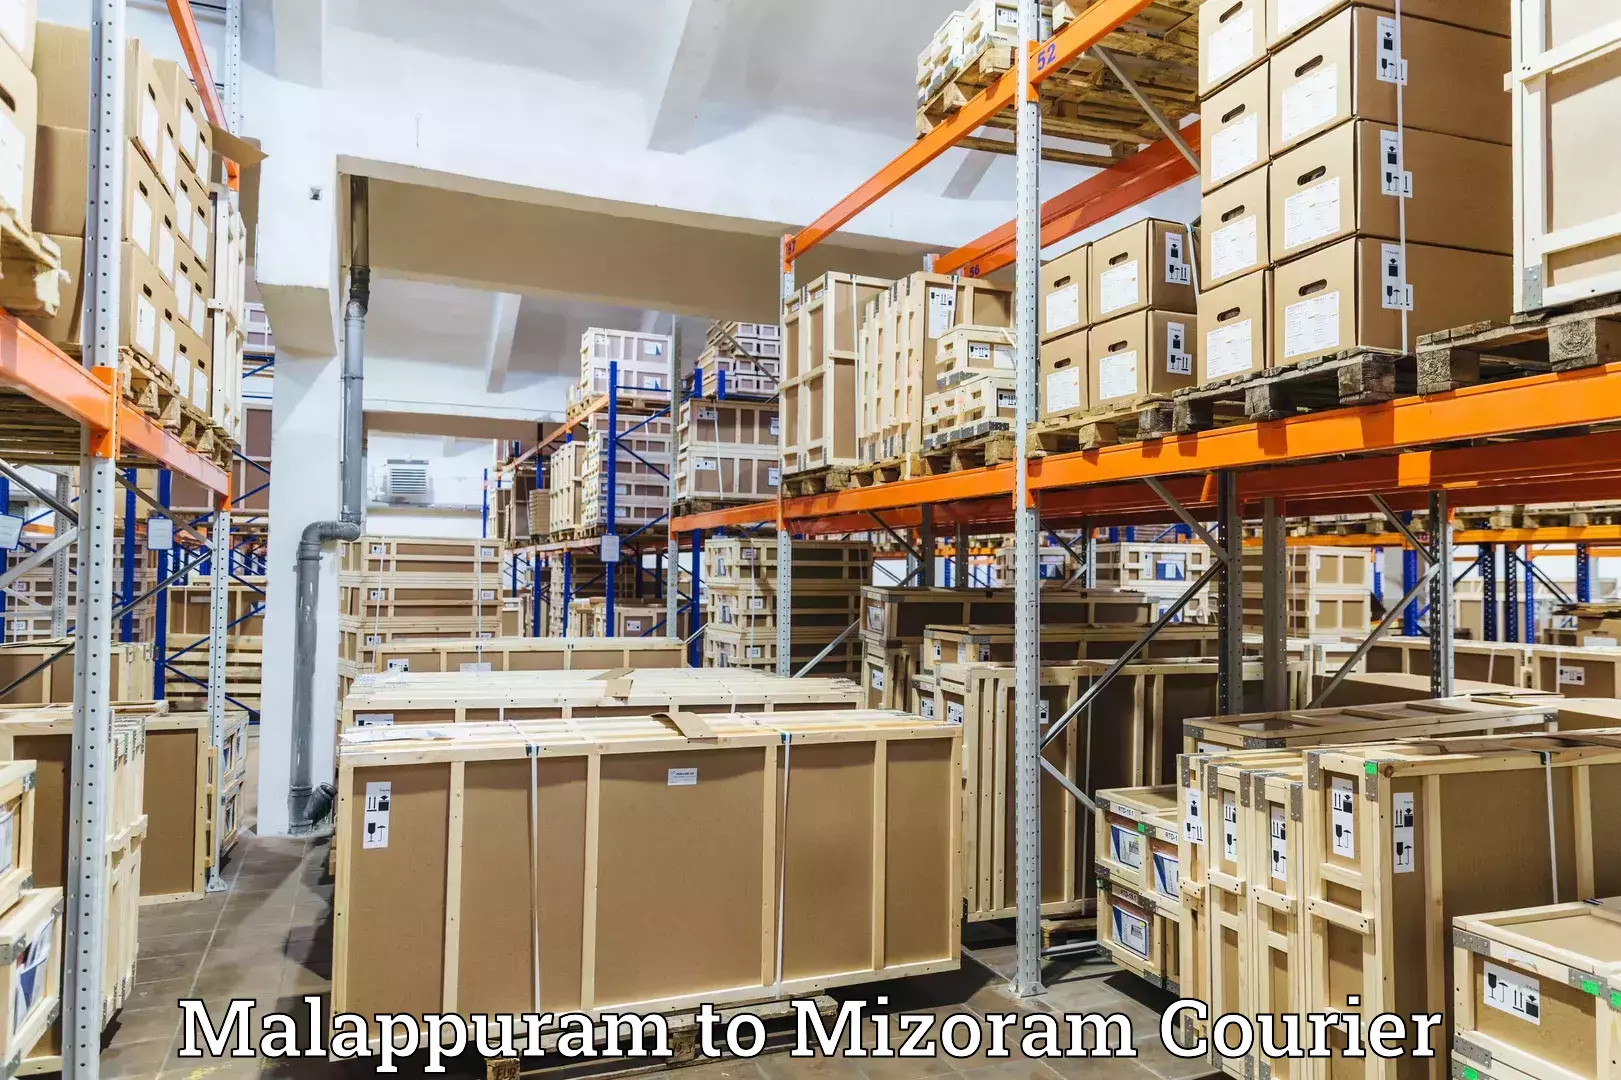 Courier service partnerships Malappuram to Mizoram